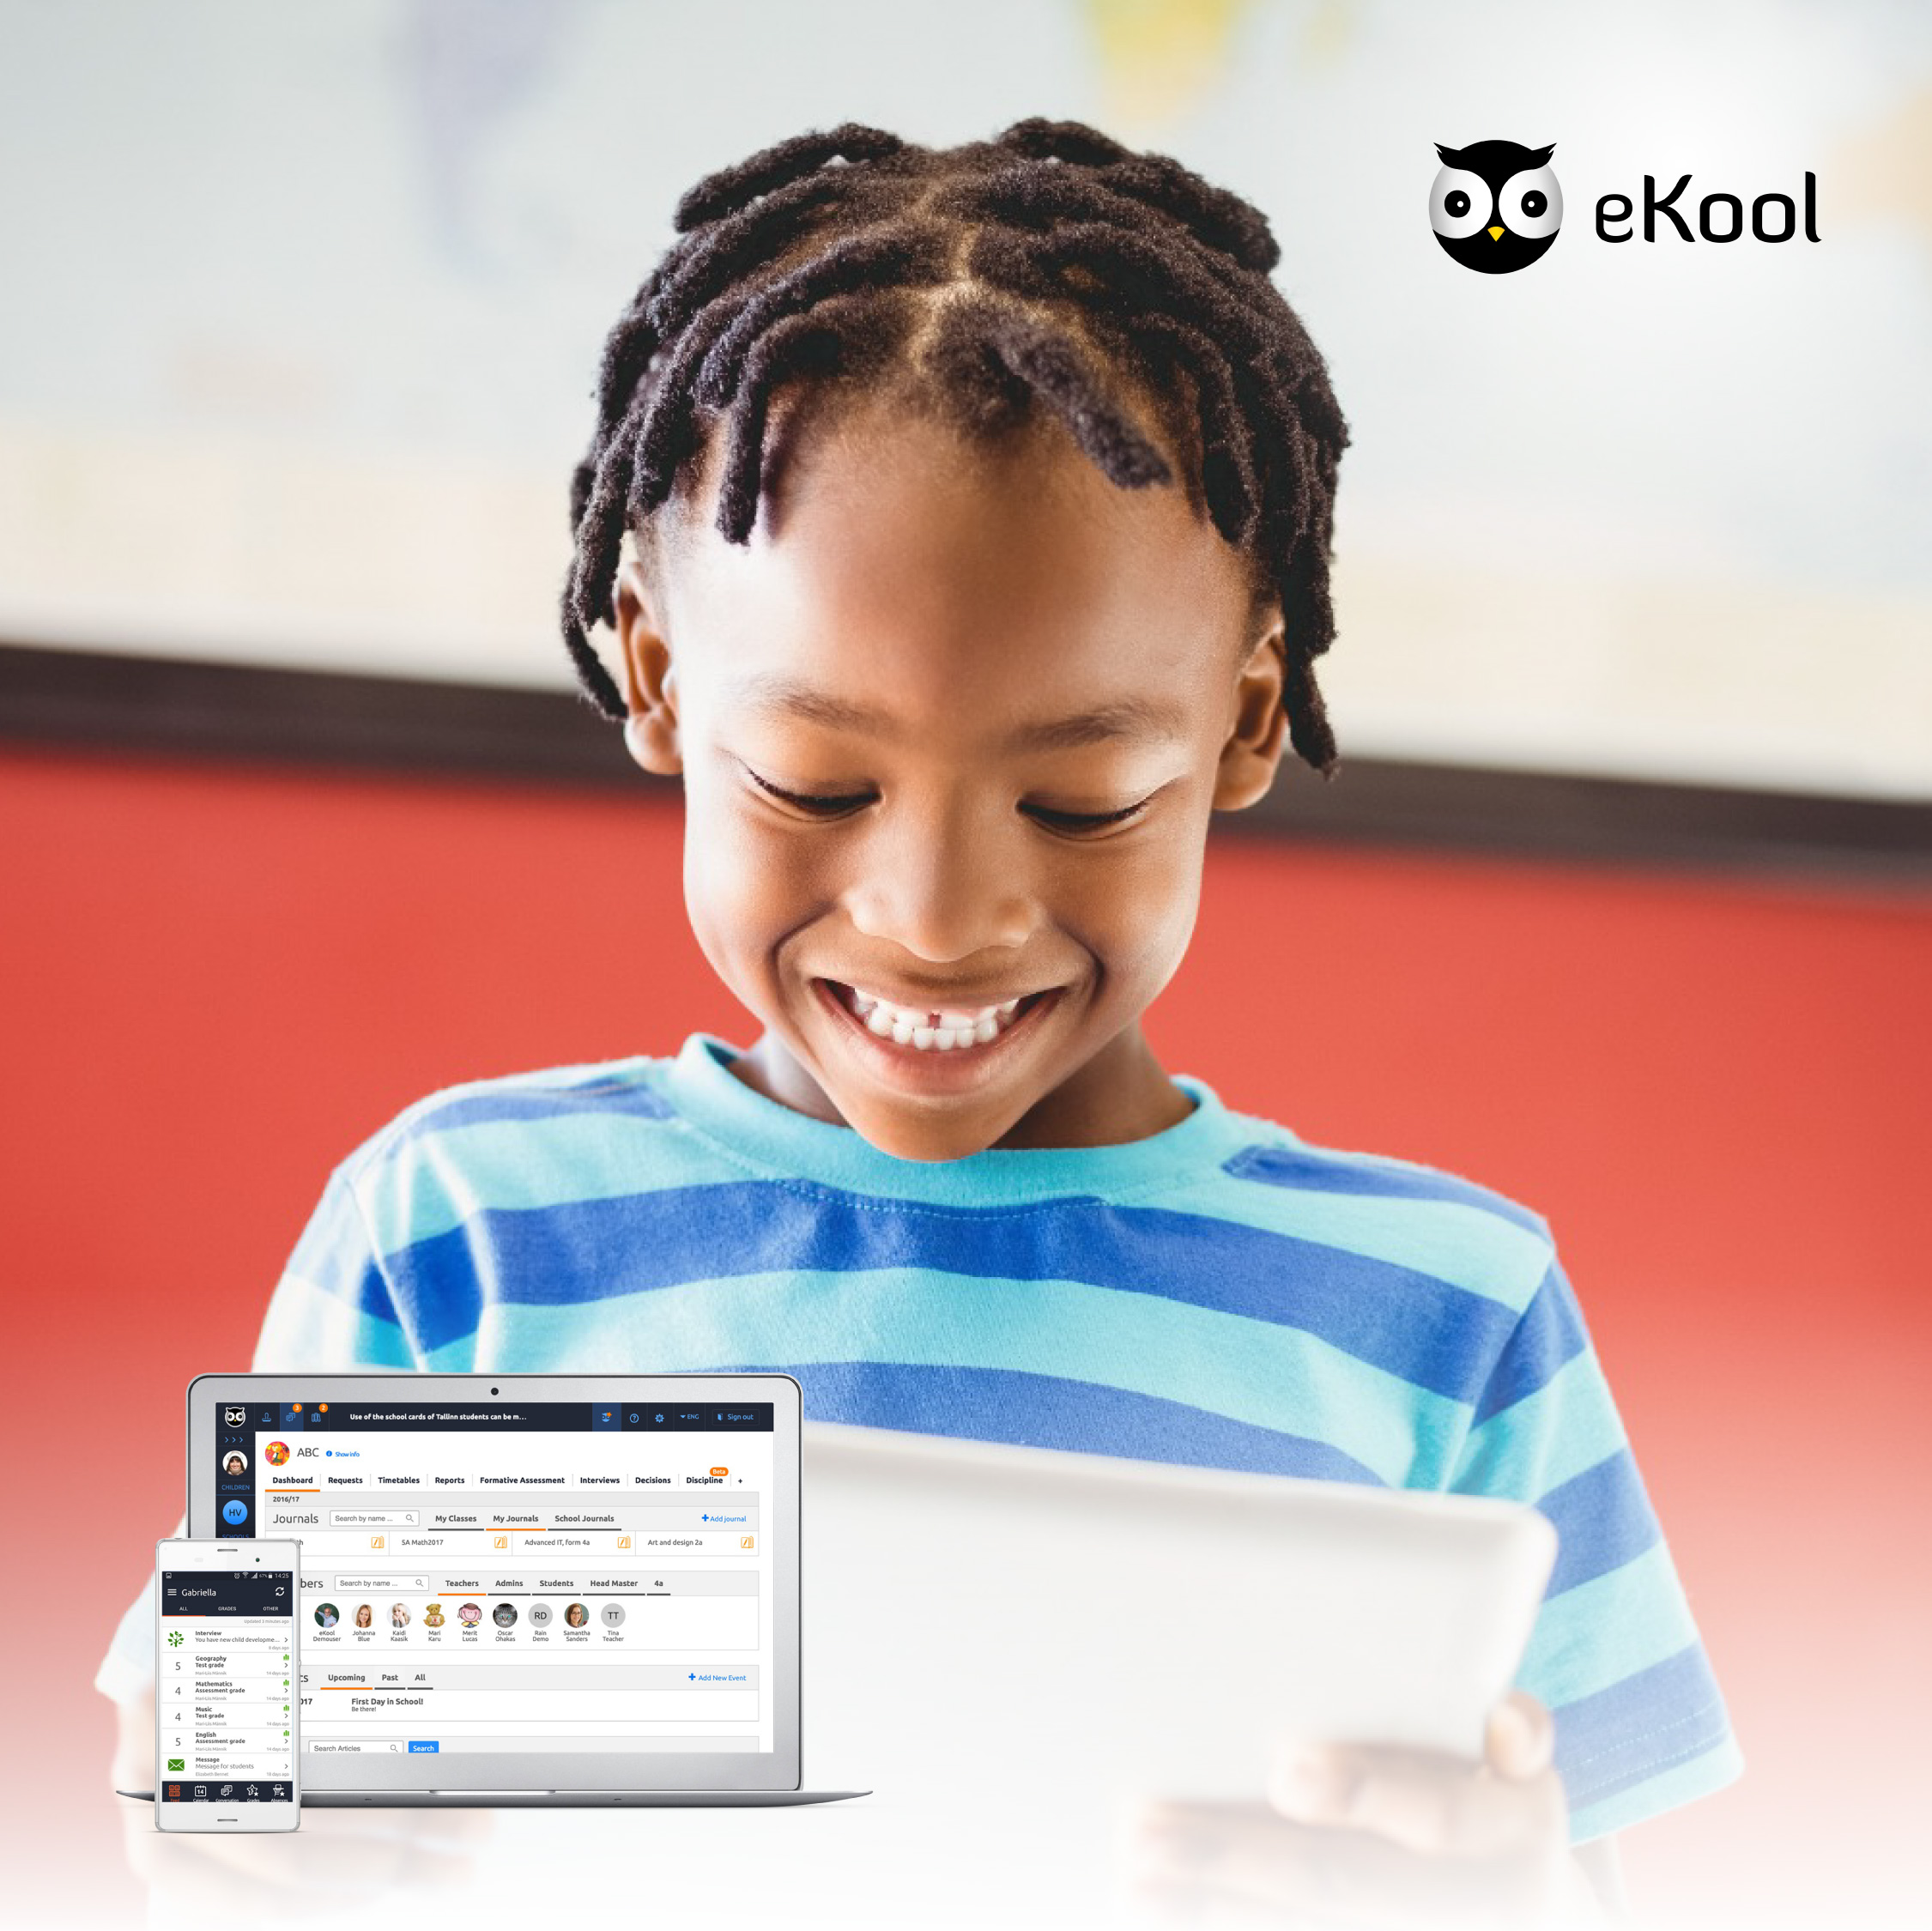 eKool School Mgt Software introduced in Ghana